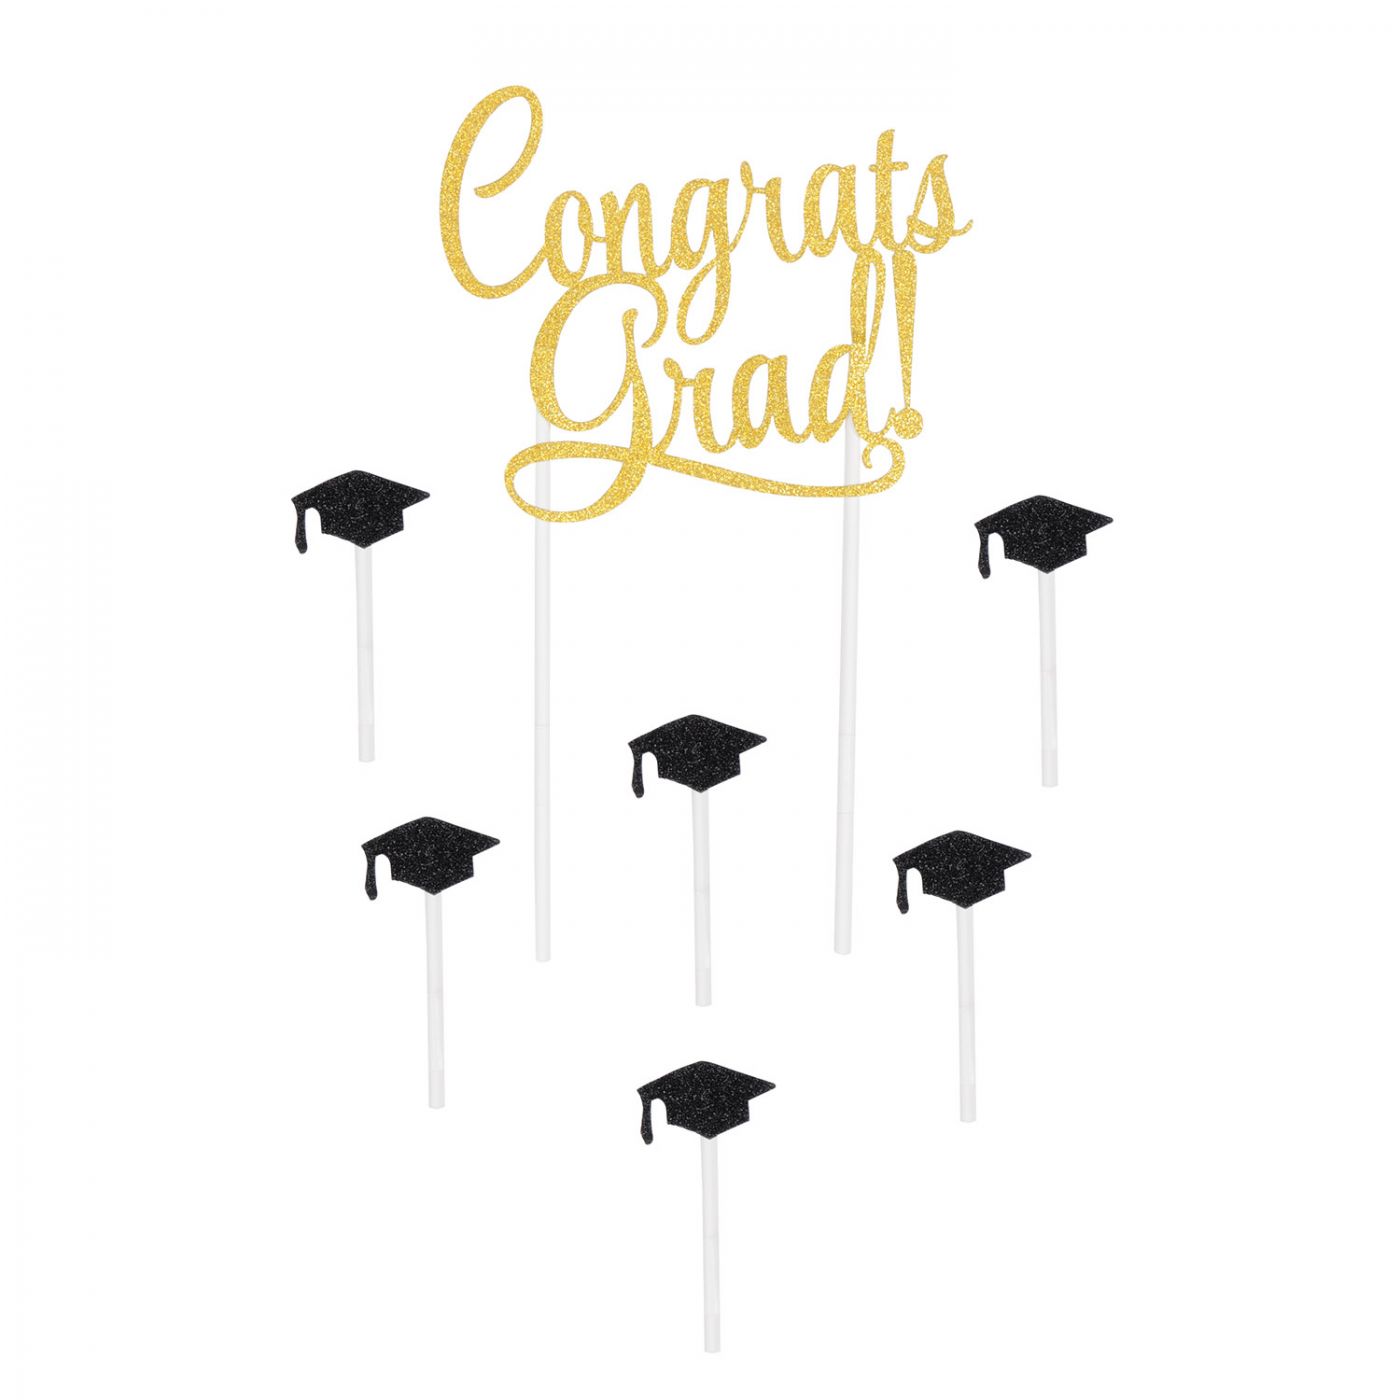 Congrats Grad! Cake Topper image